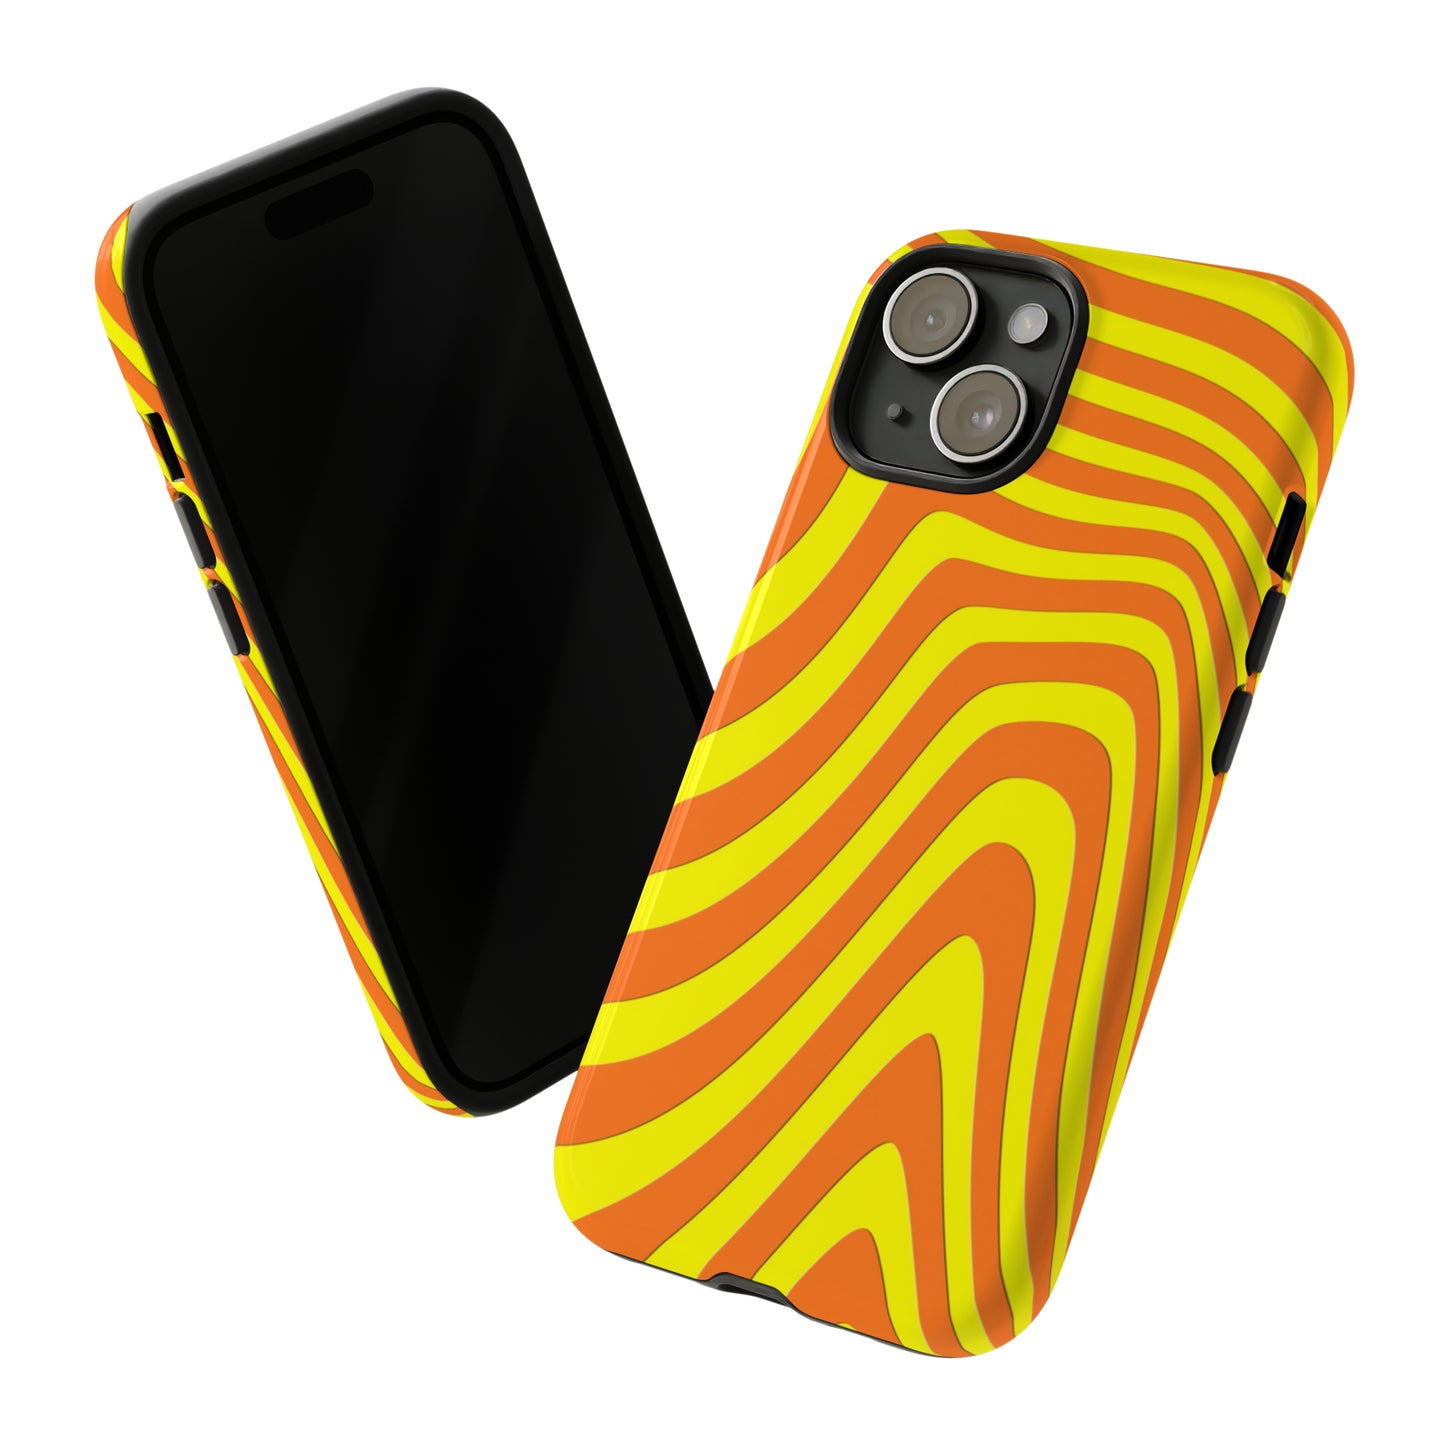 Retro wavy - yellow and orange - Tough Cases